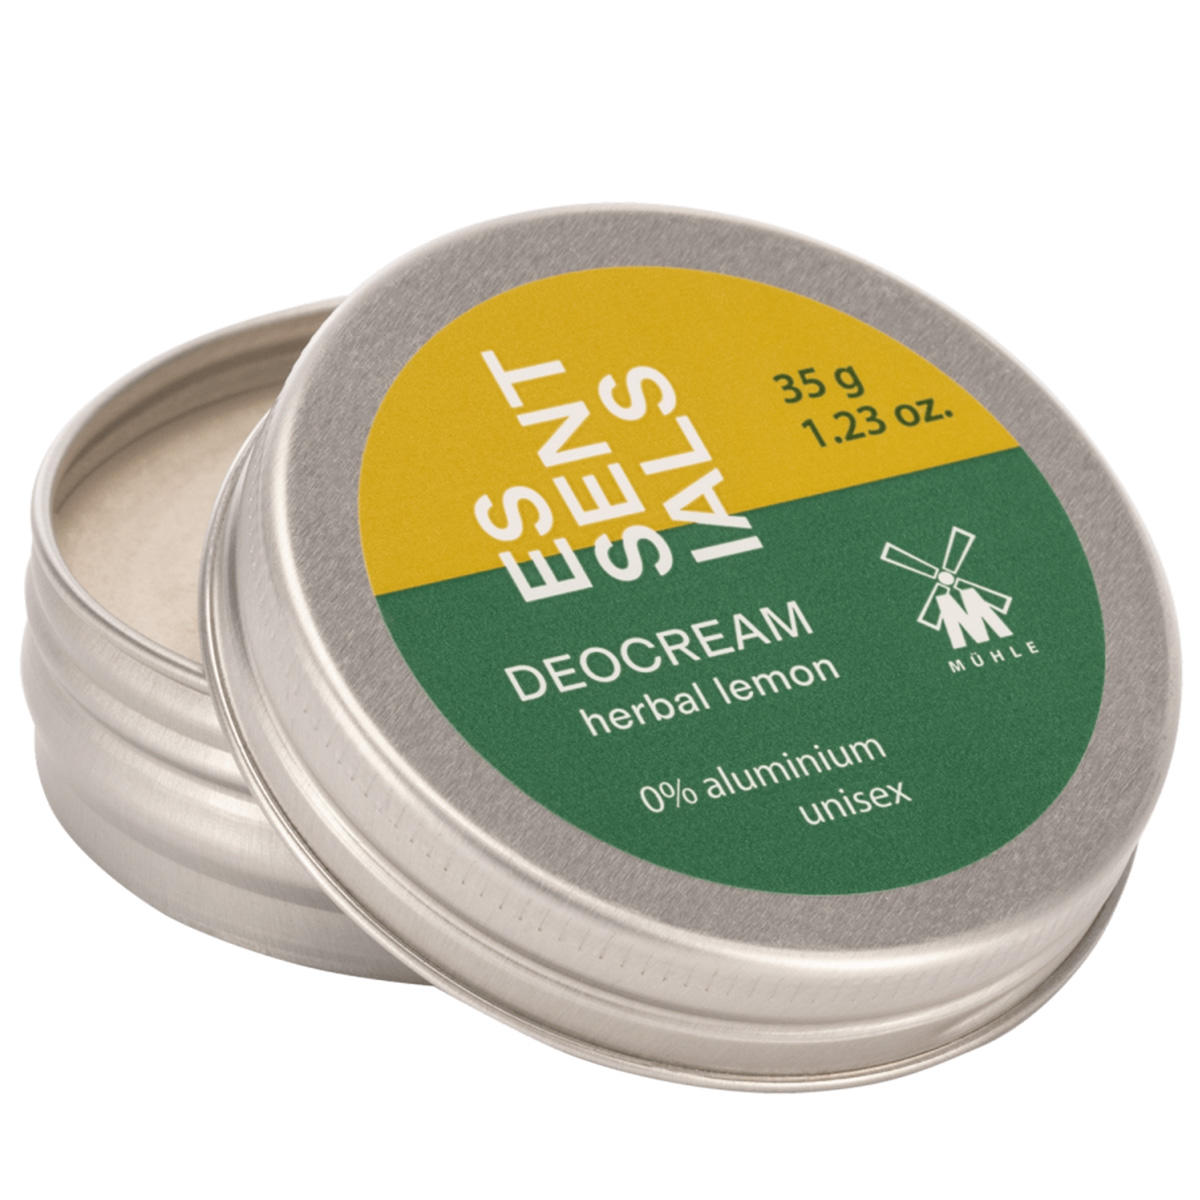 MÜHLE ESSENTIALS Crema deodorante Herbal Lemon 35 g - 3